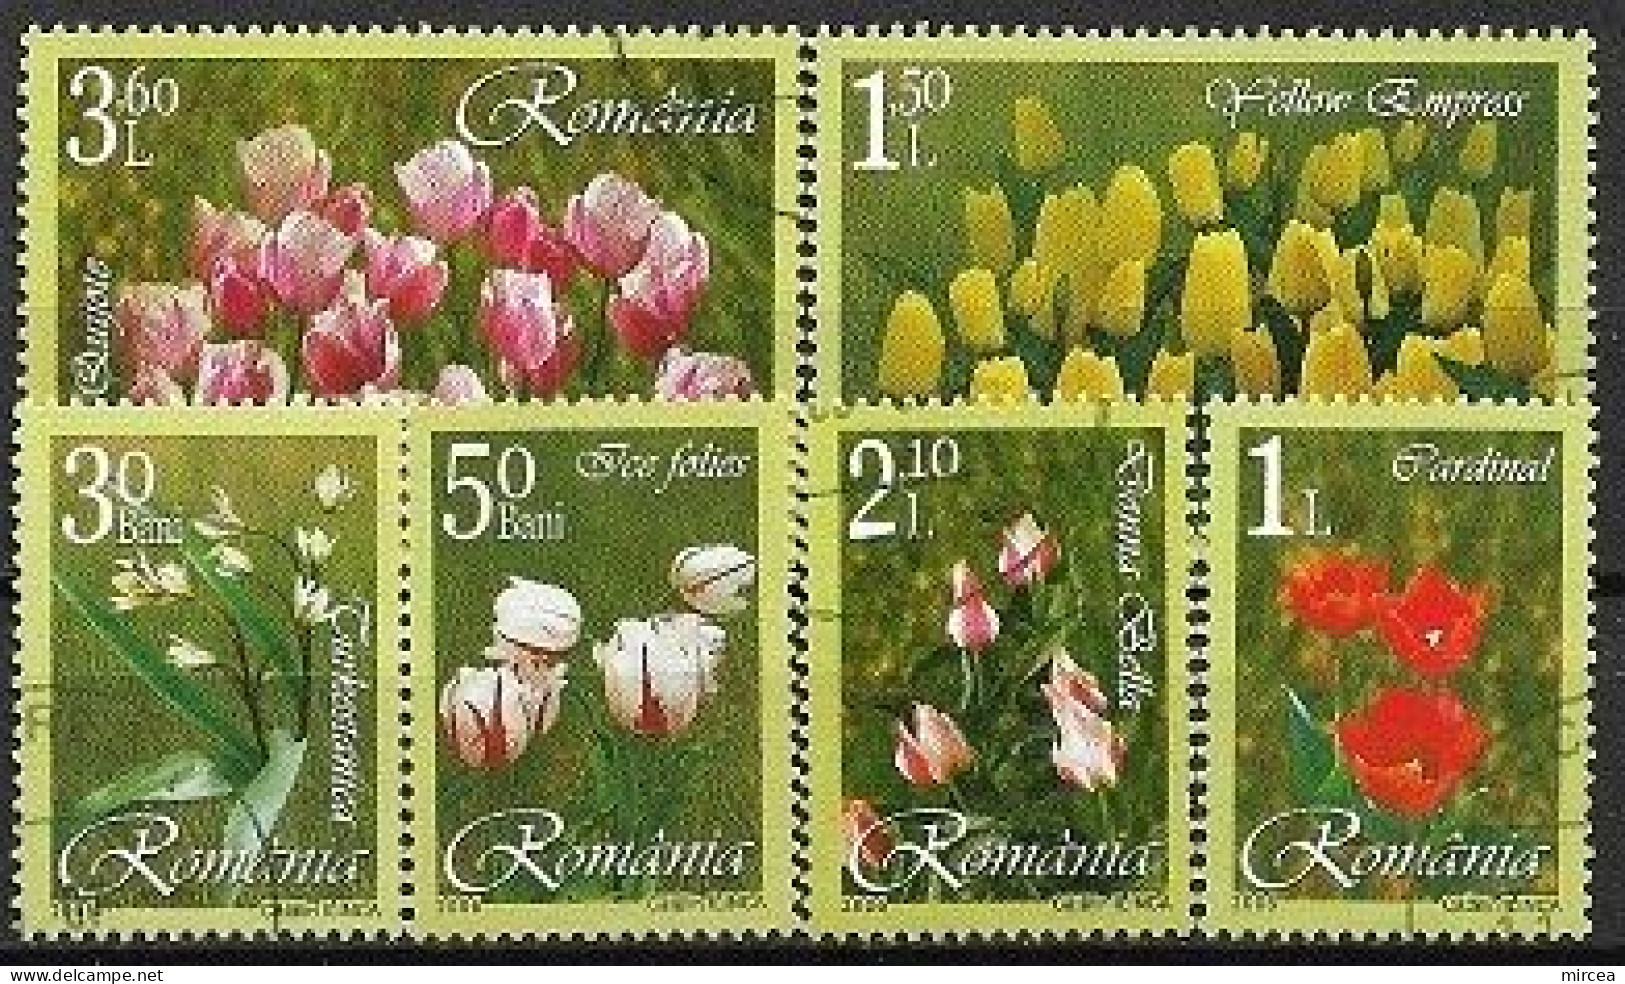 C3990 - Roumanie 2006 - Fleurs 6v.obliteres - Used Stamps